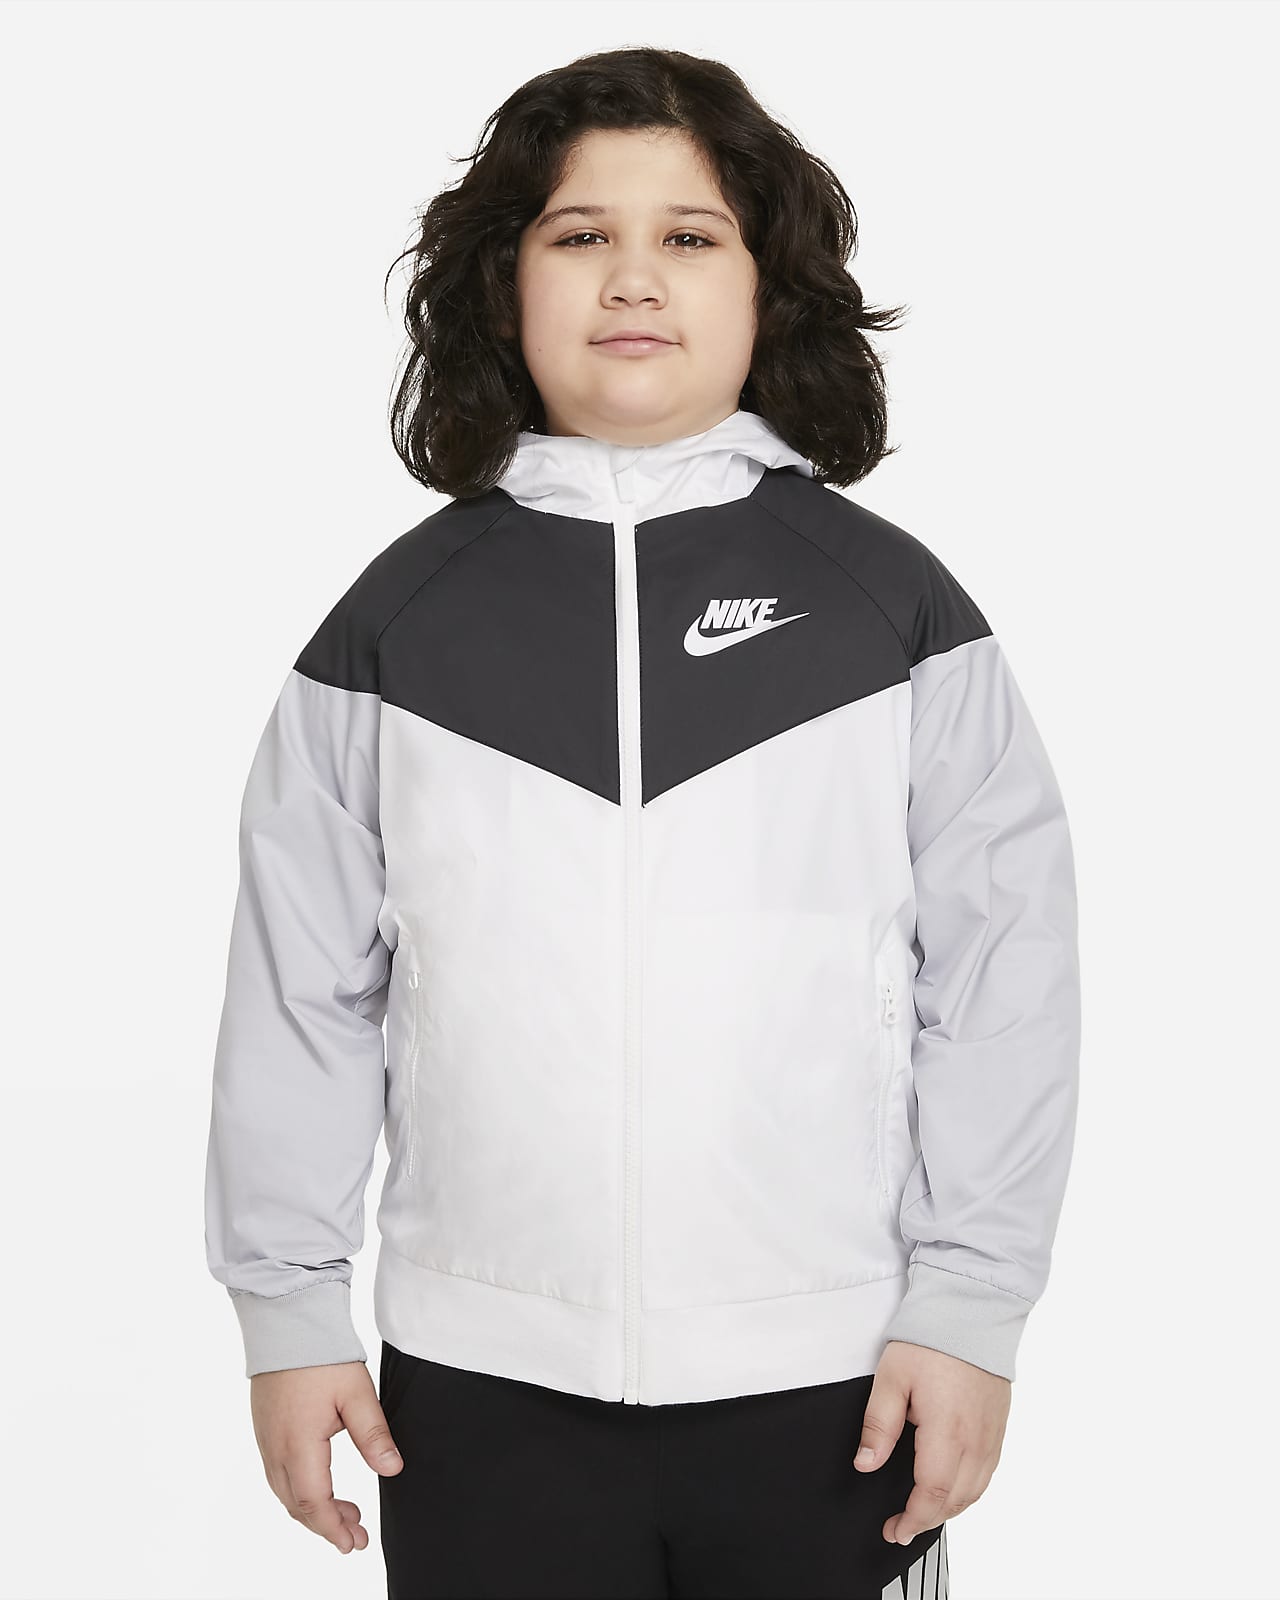 Nike Sportswear Windrunner Chaqueta con capucha holgada con longitud hasta la cadera - Niño (Talla grande)